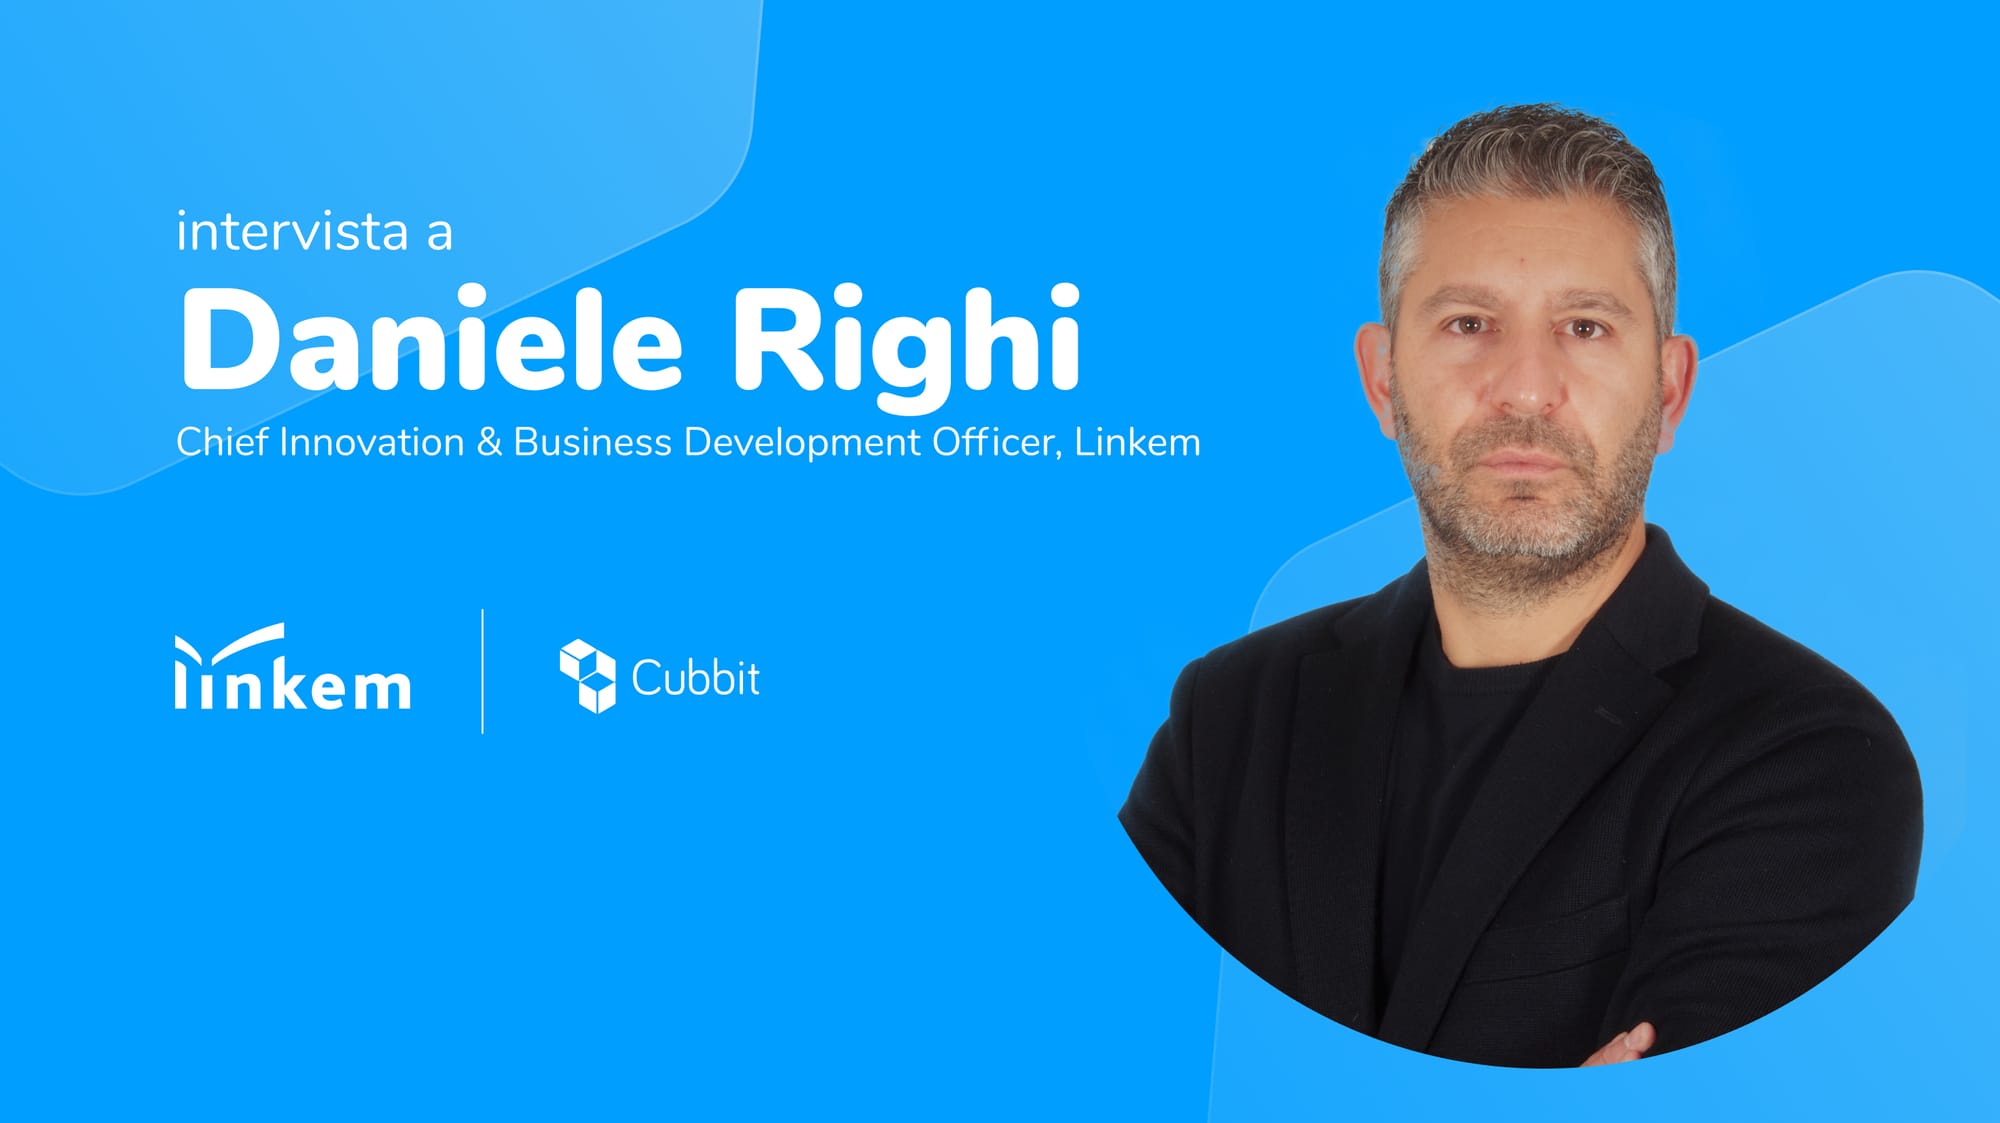 Alleanza Linkem & Cubbit per un nuovo paradigma di cloud distribuito: intervista al Chief Innovation & Business Development Officer di Linkem, Daniele Righi